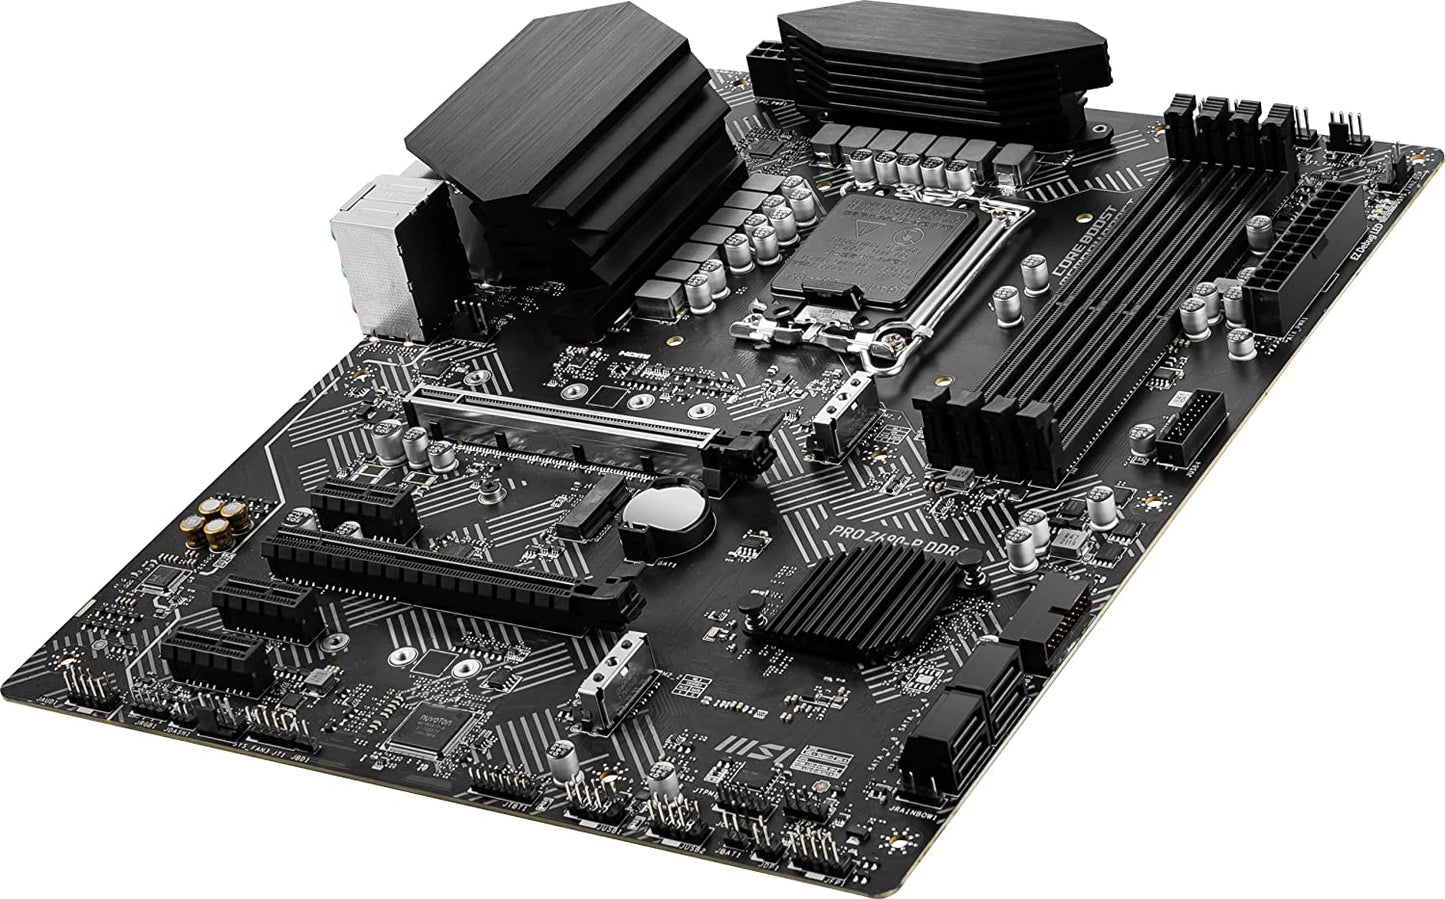 MSI PRO Z690-P DDR4 Motherboard ATX - Supports Intel Core 12th Gen Processors